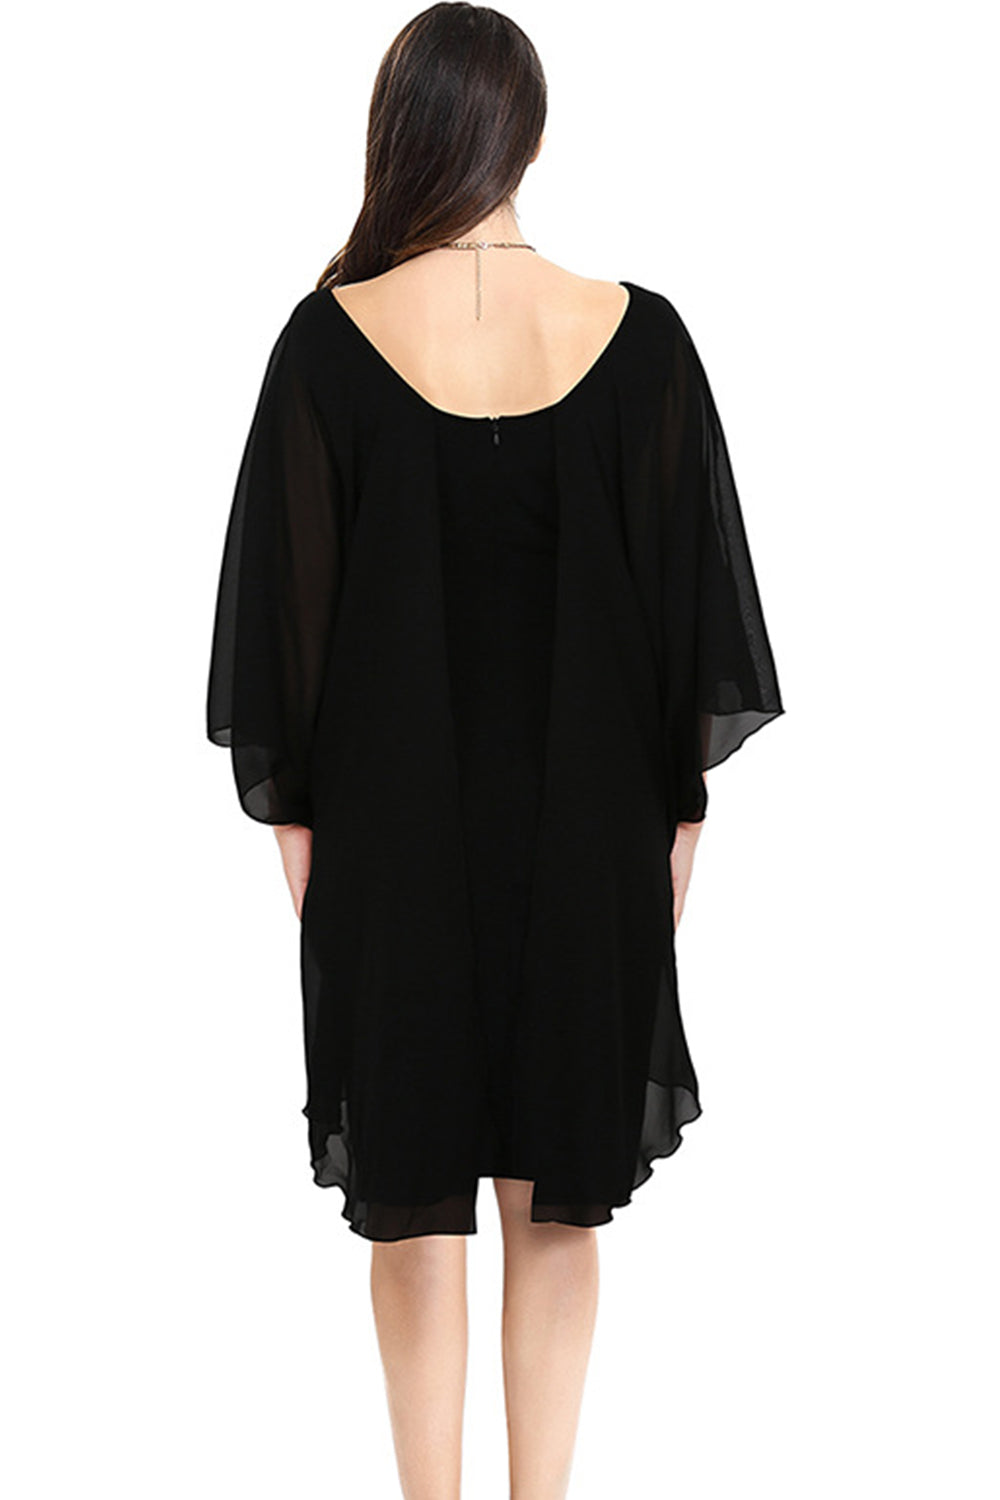 Ketty More Women Comfortable High Quality Fashionable Black Dress-KMWD049